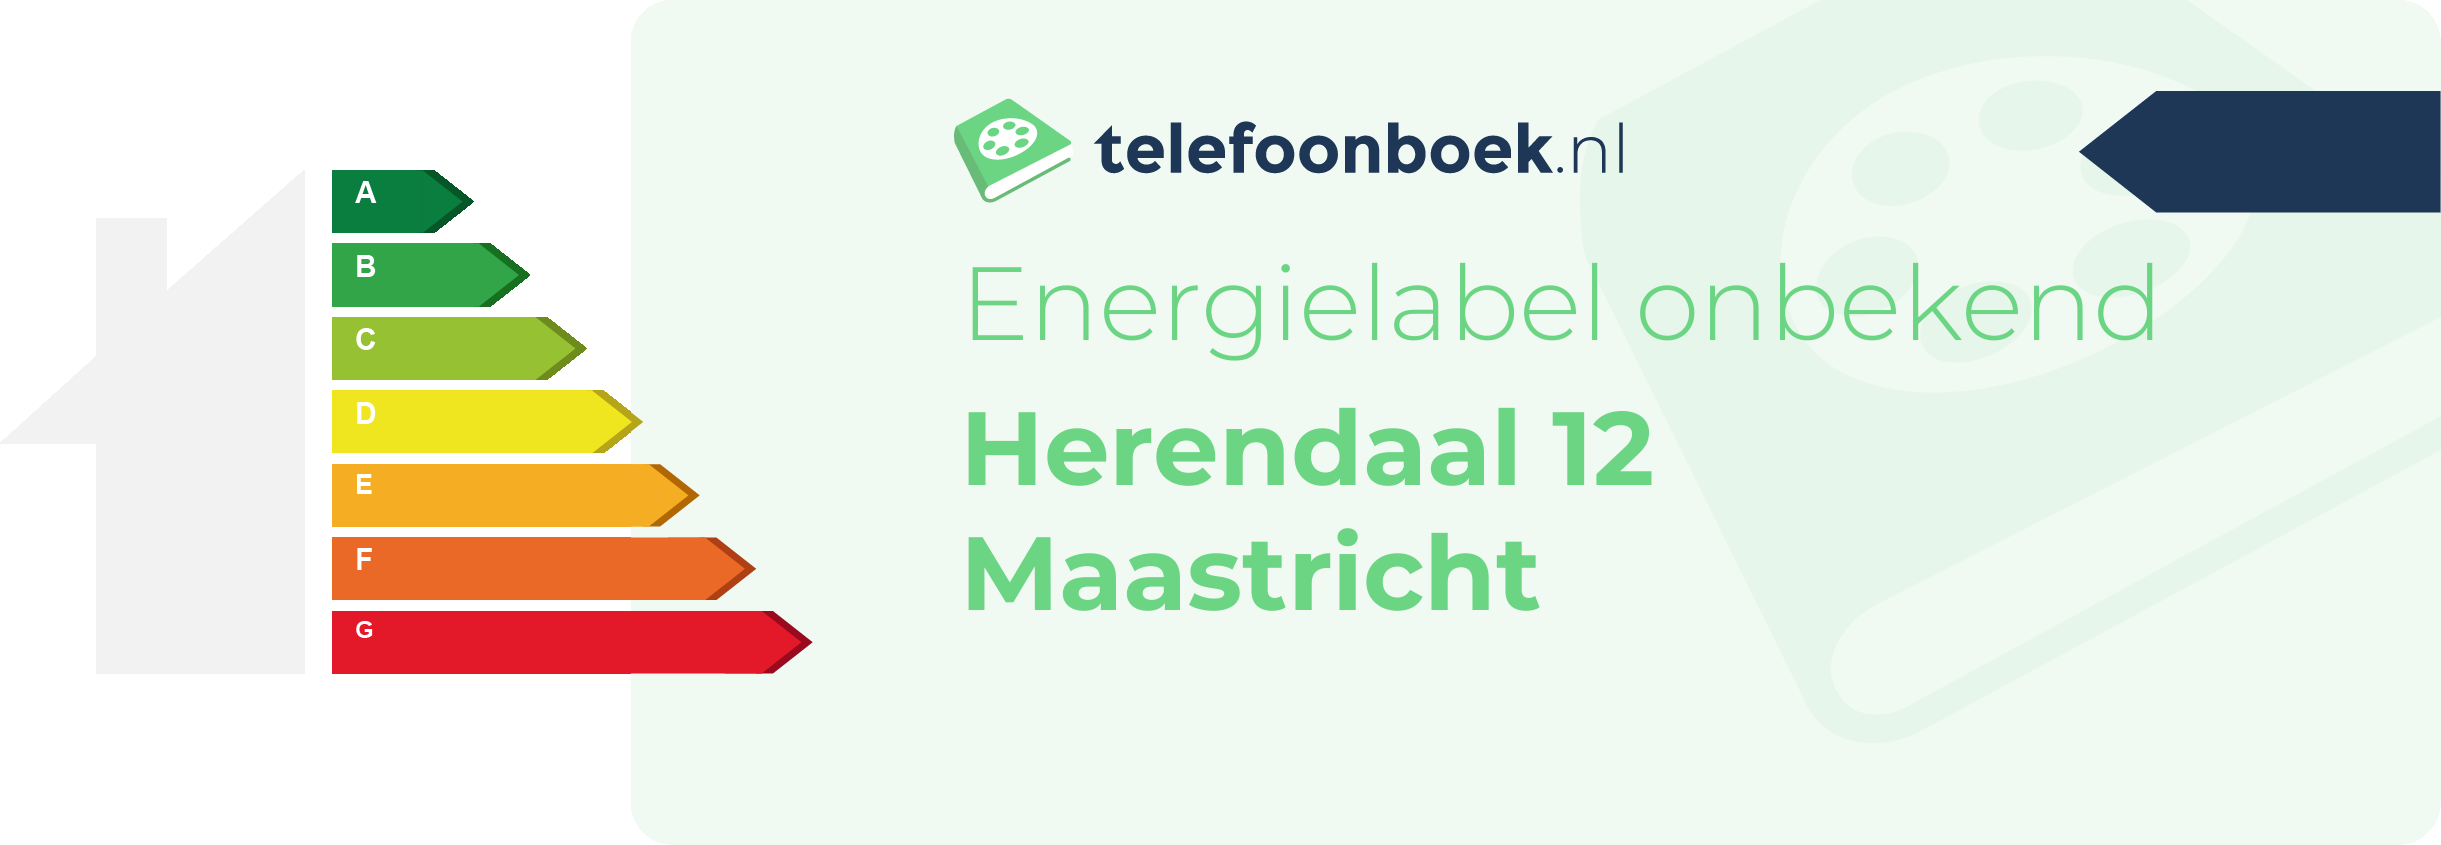 Energielabel Herendaal 12 Maastricht